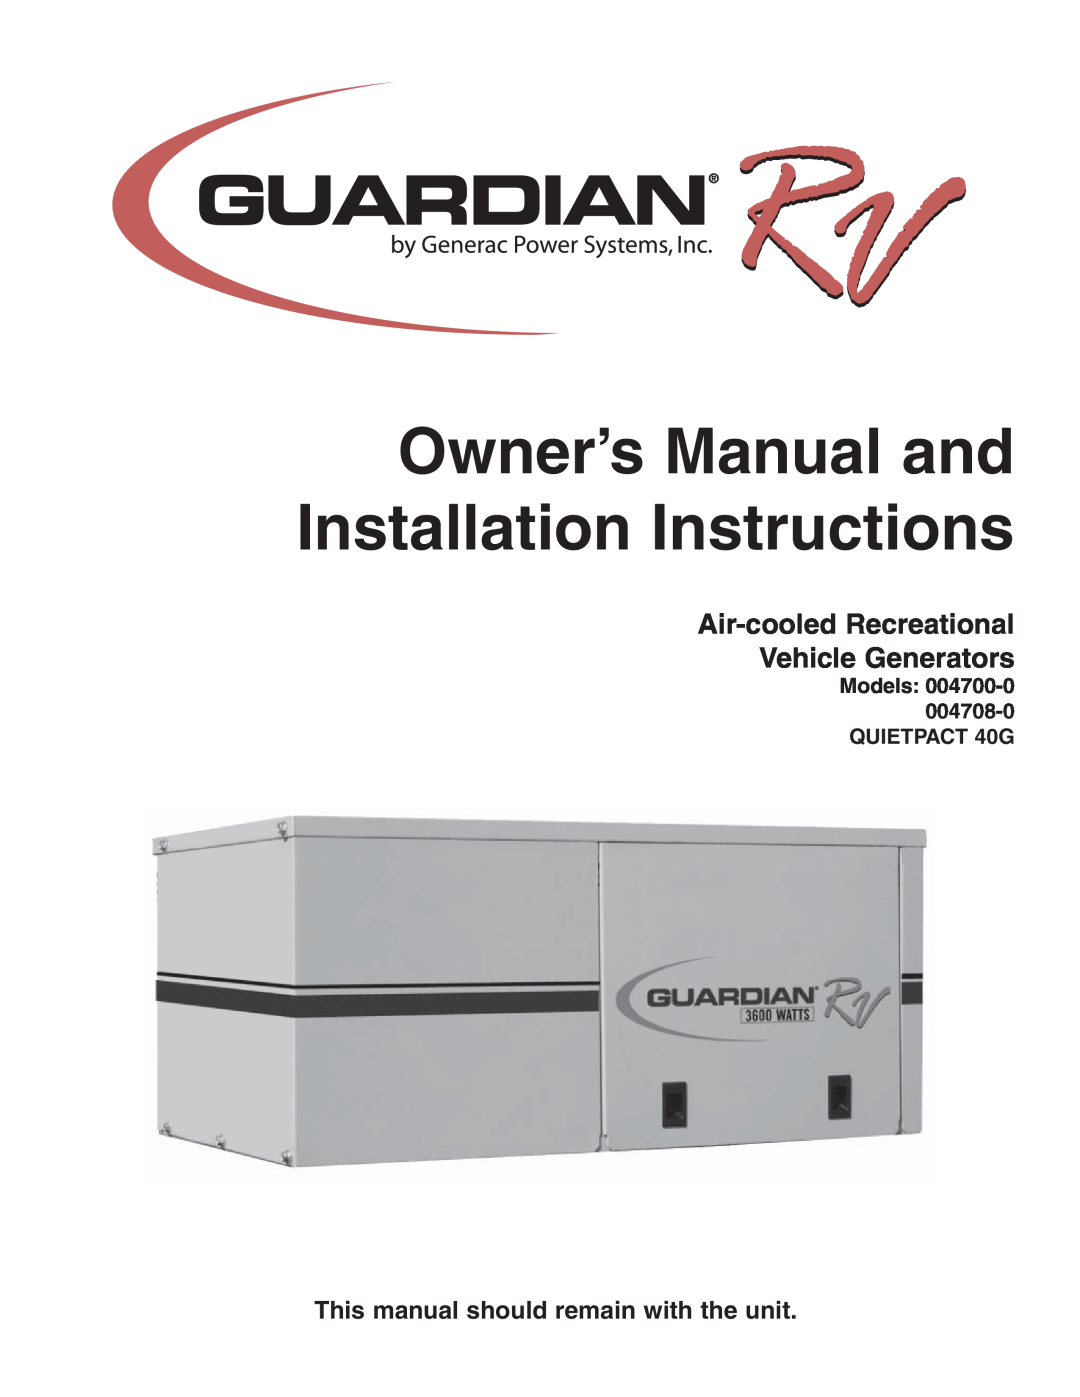 Guardian Technologies 004708-0 owner manual Air-cooled Recreational Vehicle Generators, Models 004700-0 QUIETPACT 40G 